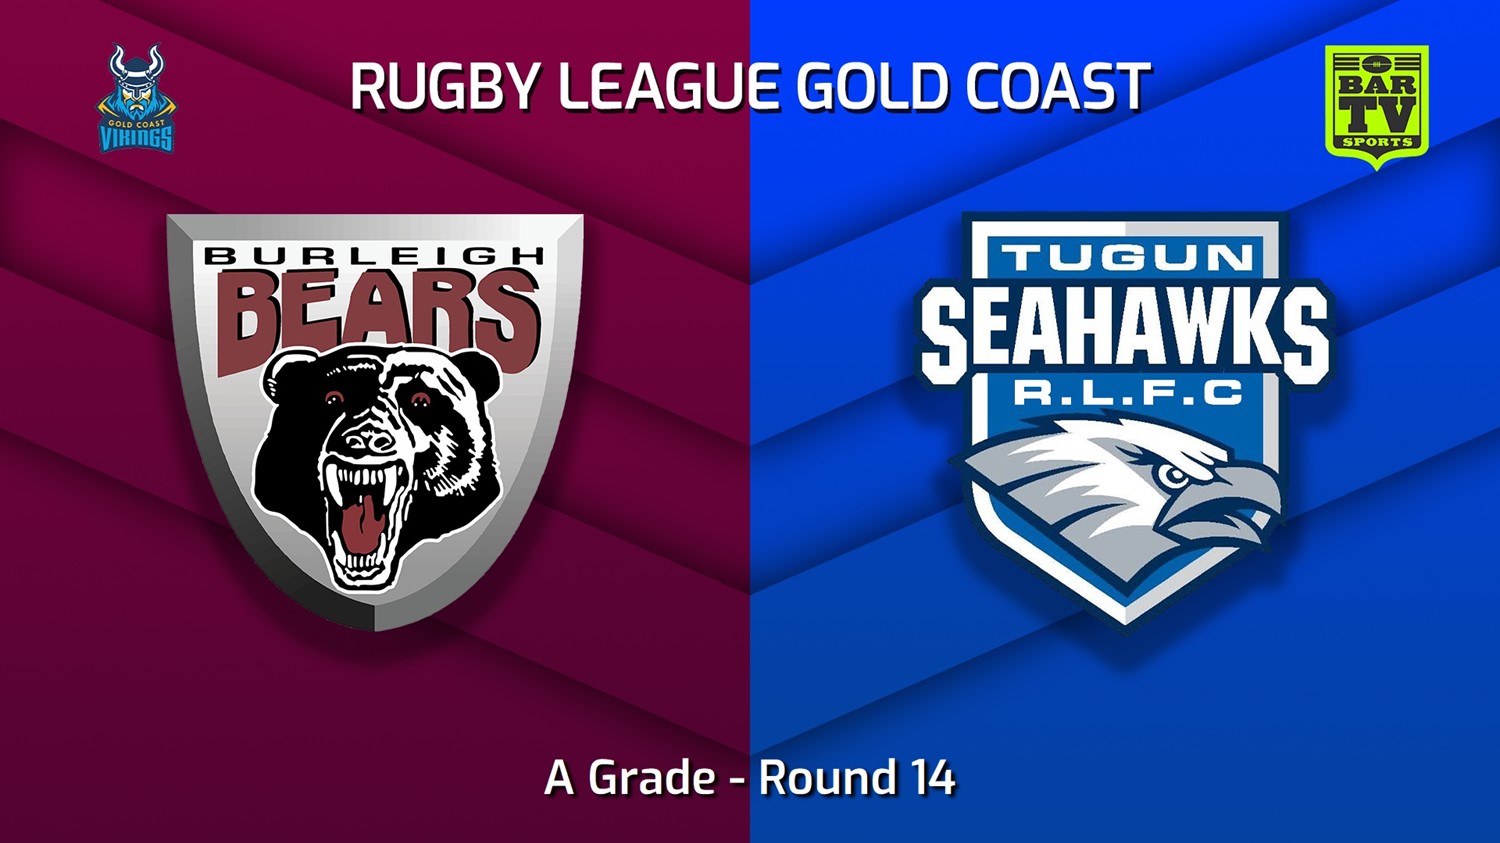 220807-Gold Coast Round 14 - A Grade - Burleigh Bears v Tugun Seahawks Minigame Slate Image